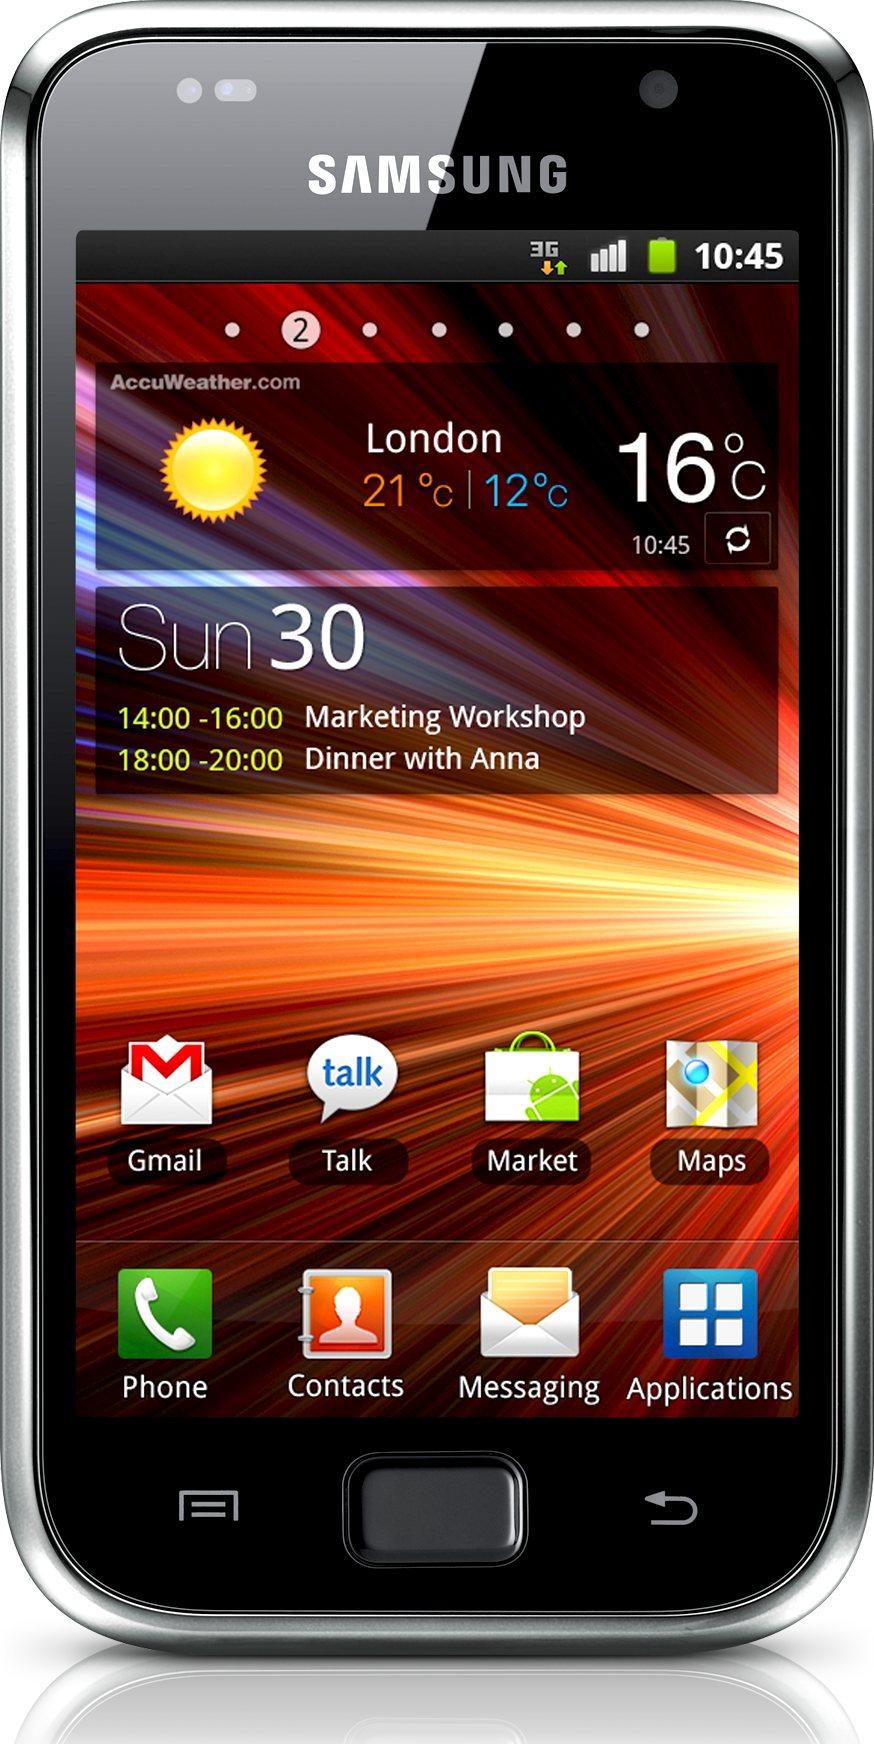 Galaxy S Plus GT-I9001